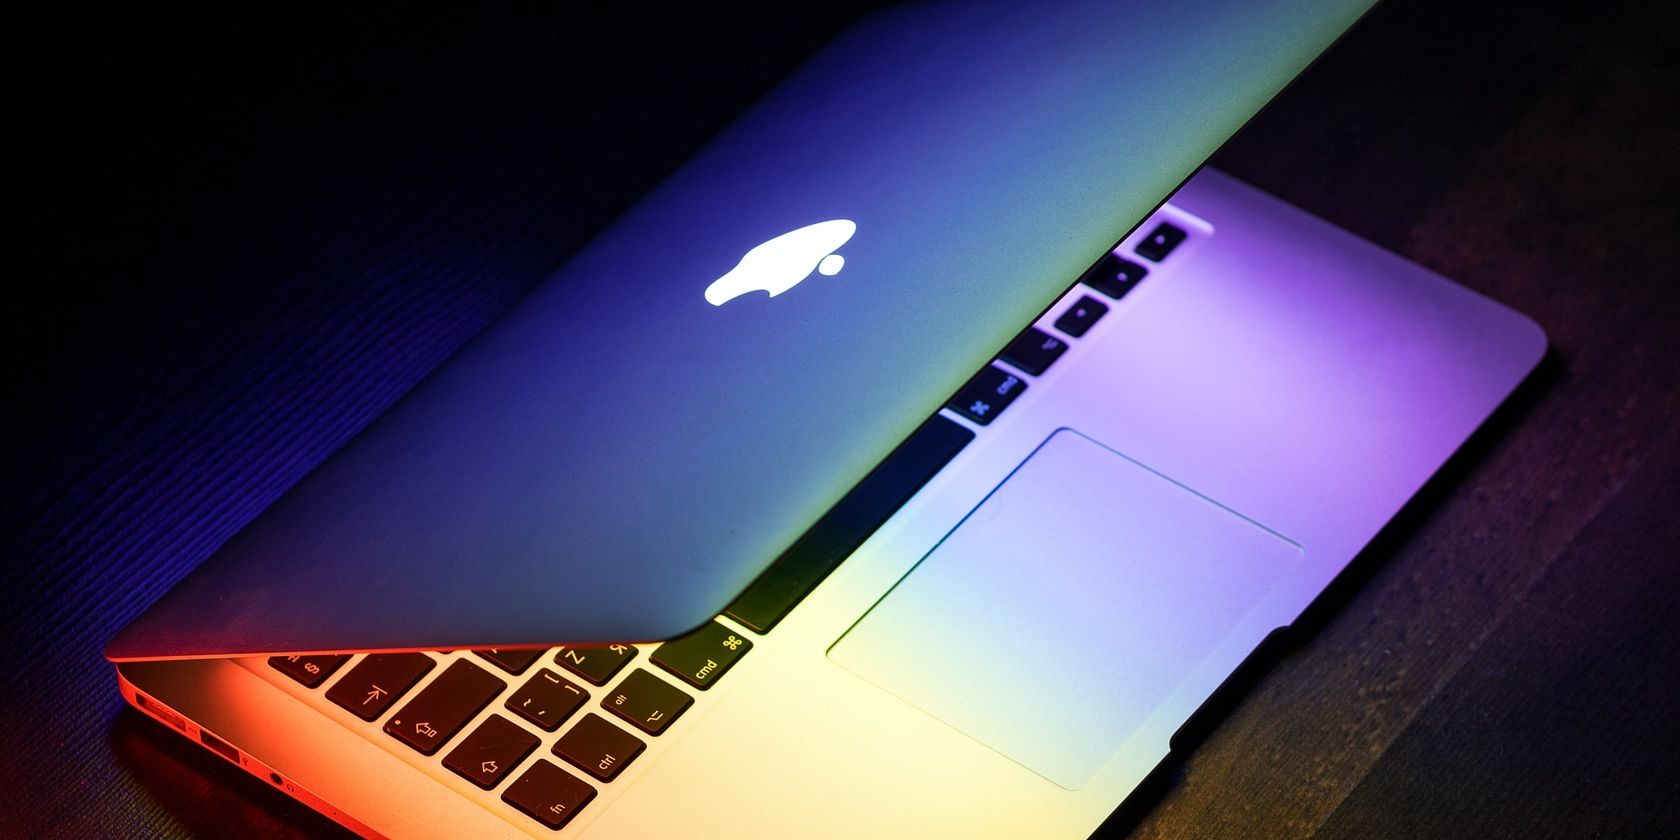 macbook laptop on dark background with bright wallpaper